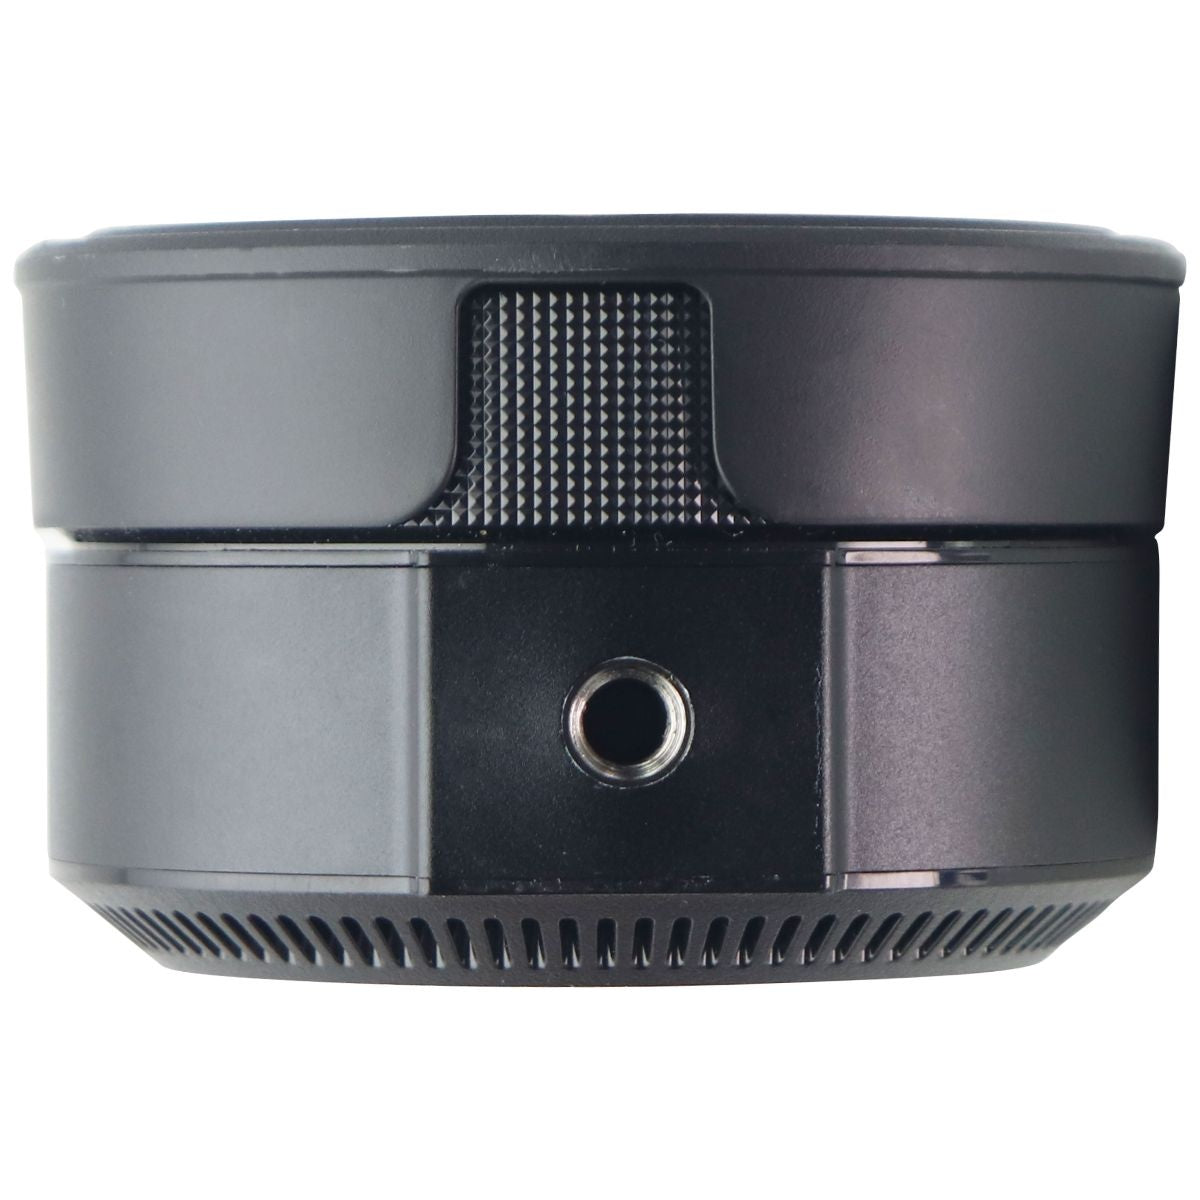 Razer Kiyo Pro 60 fps Web Camera - Black for sale online